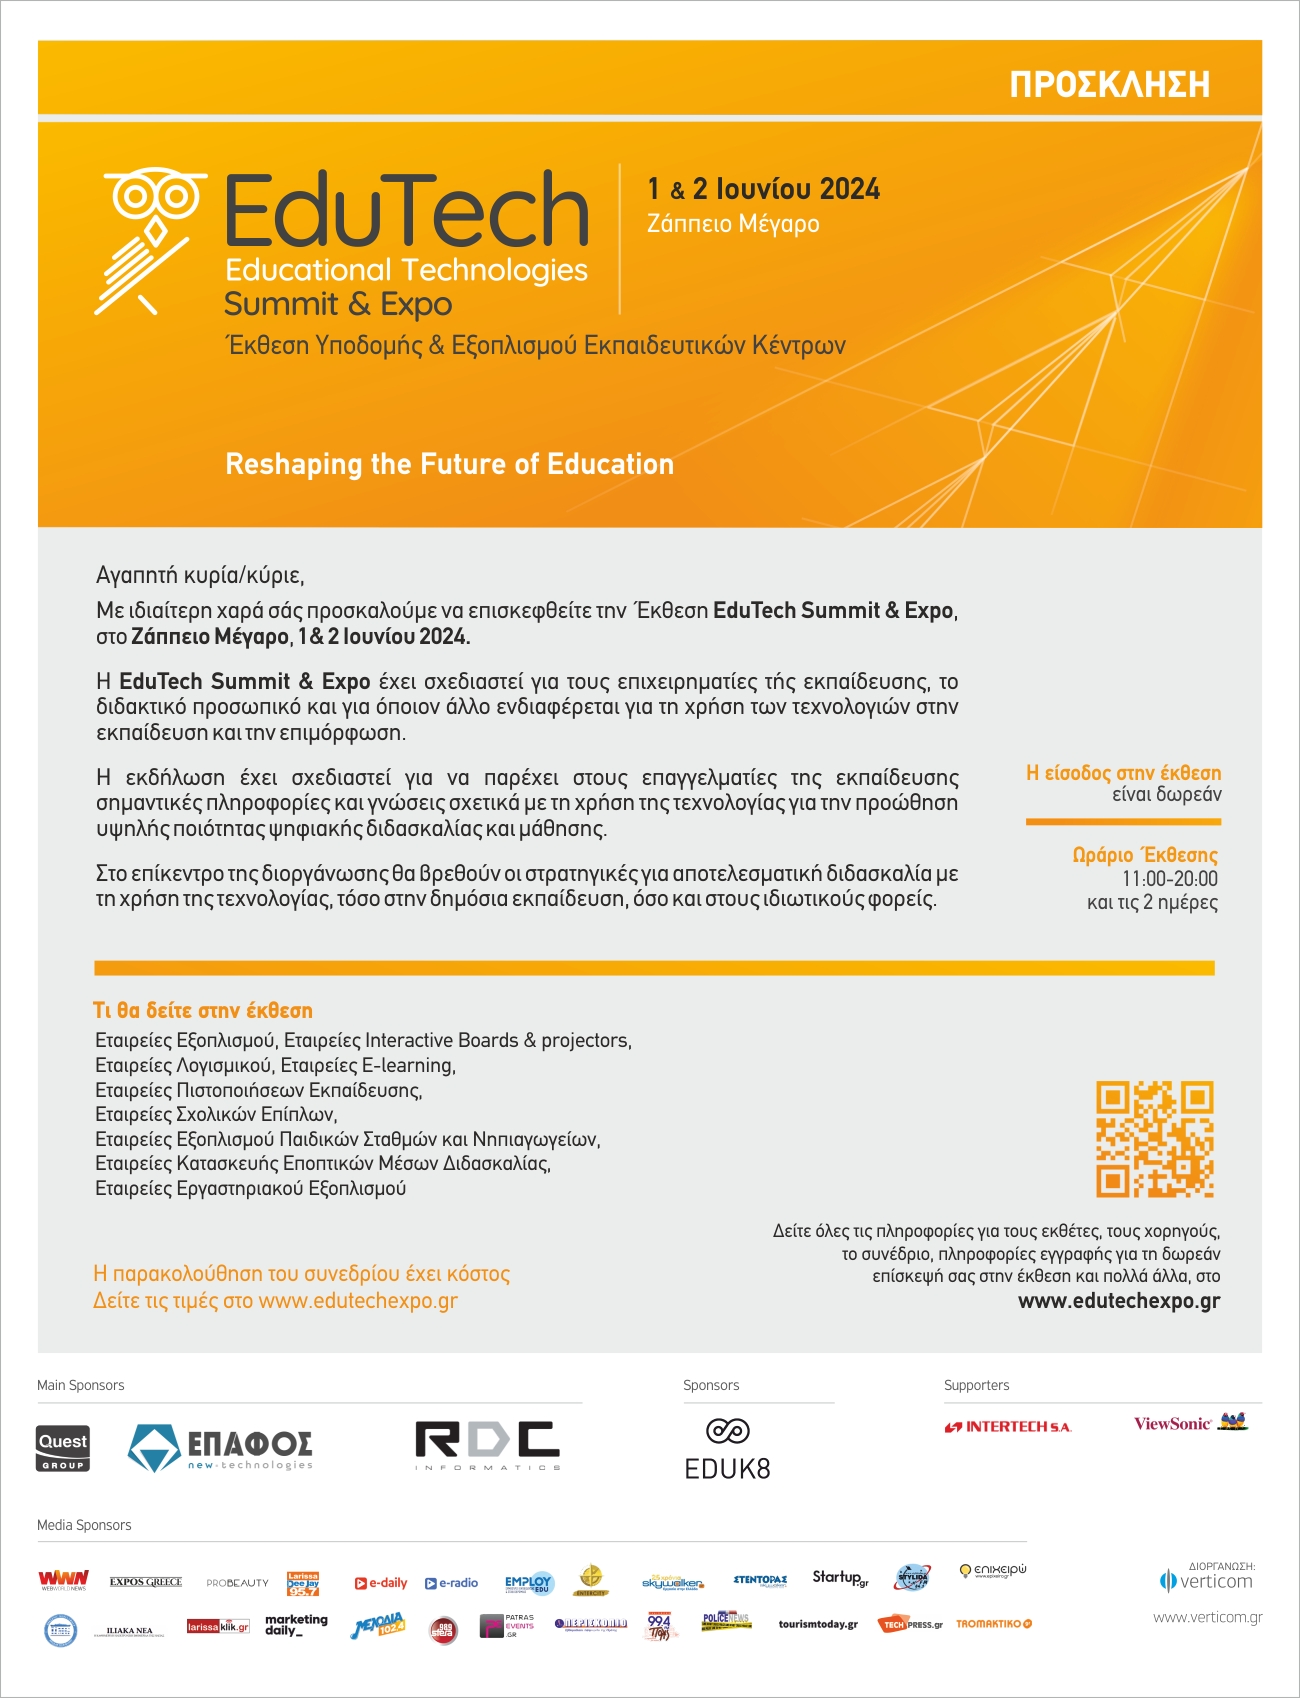 edutech_invitation_digital_F2140091643.jpg